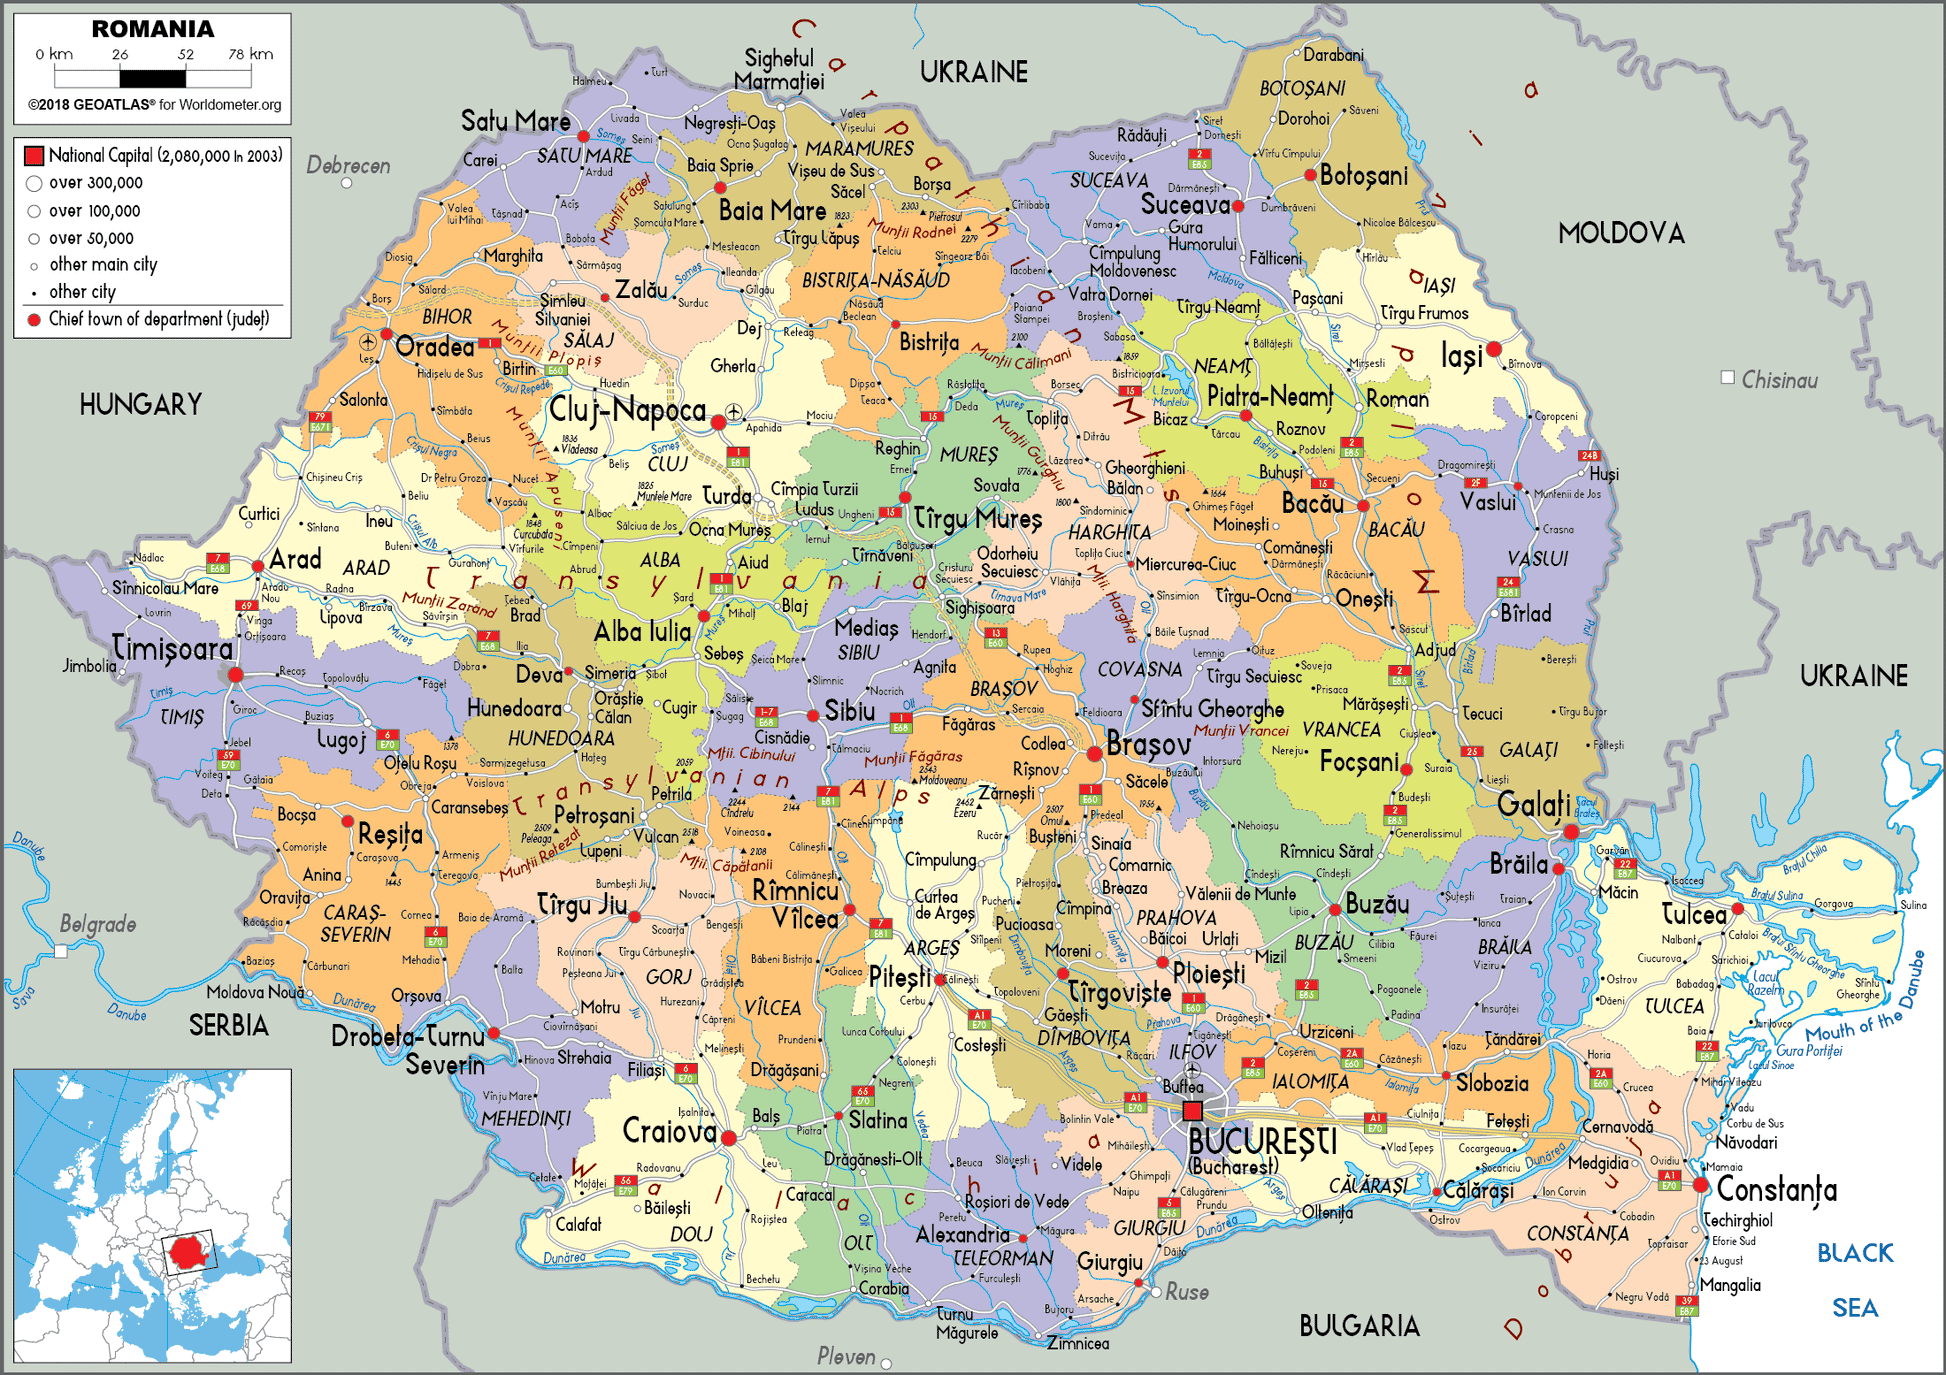 Overzicht regio's in Roemenië